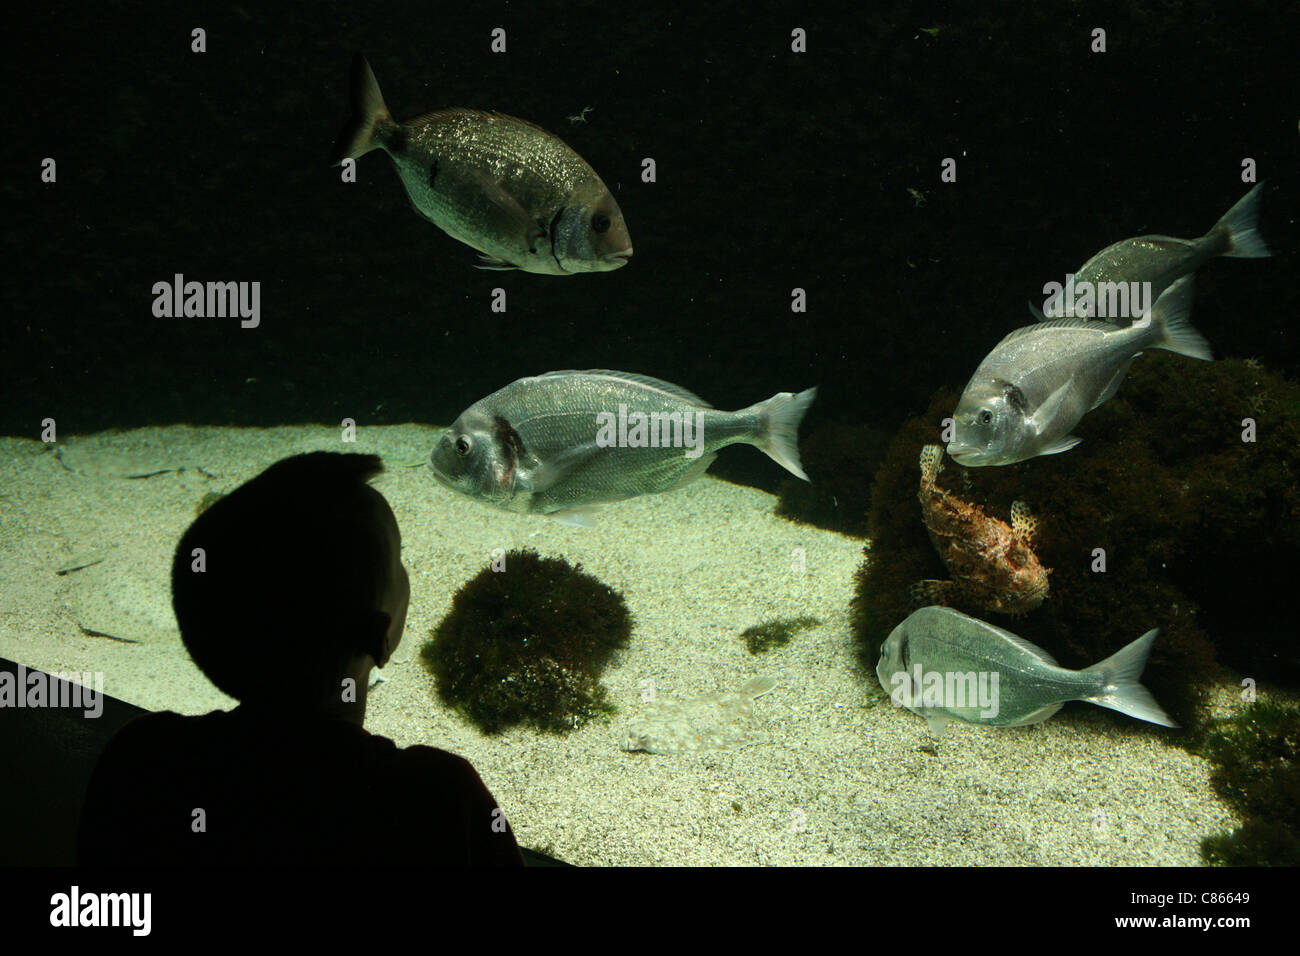 A boy examines an aquarium with school of salema porgy fishes (Sarpa salpa) at Zoo Basel, Switzerland. Stock Photo